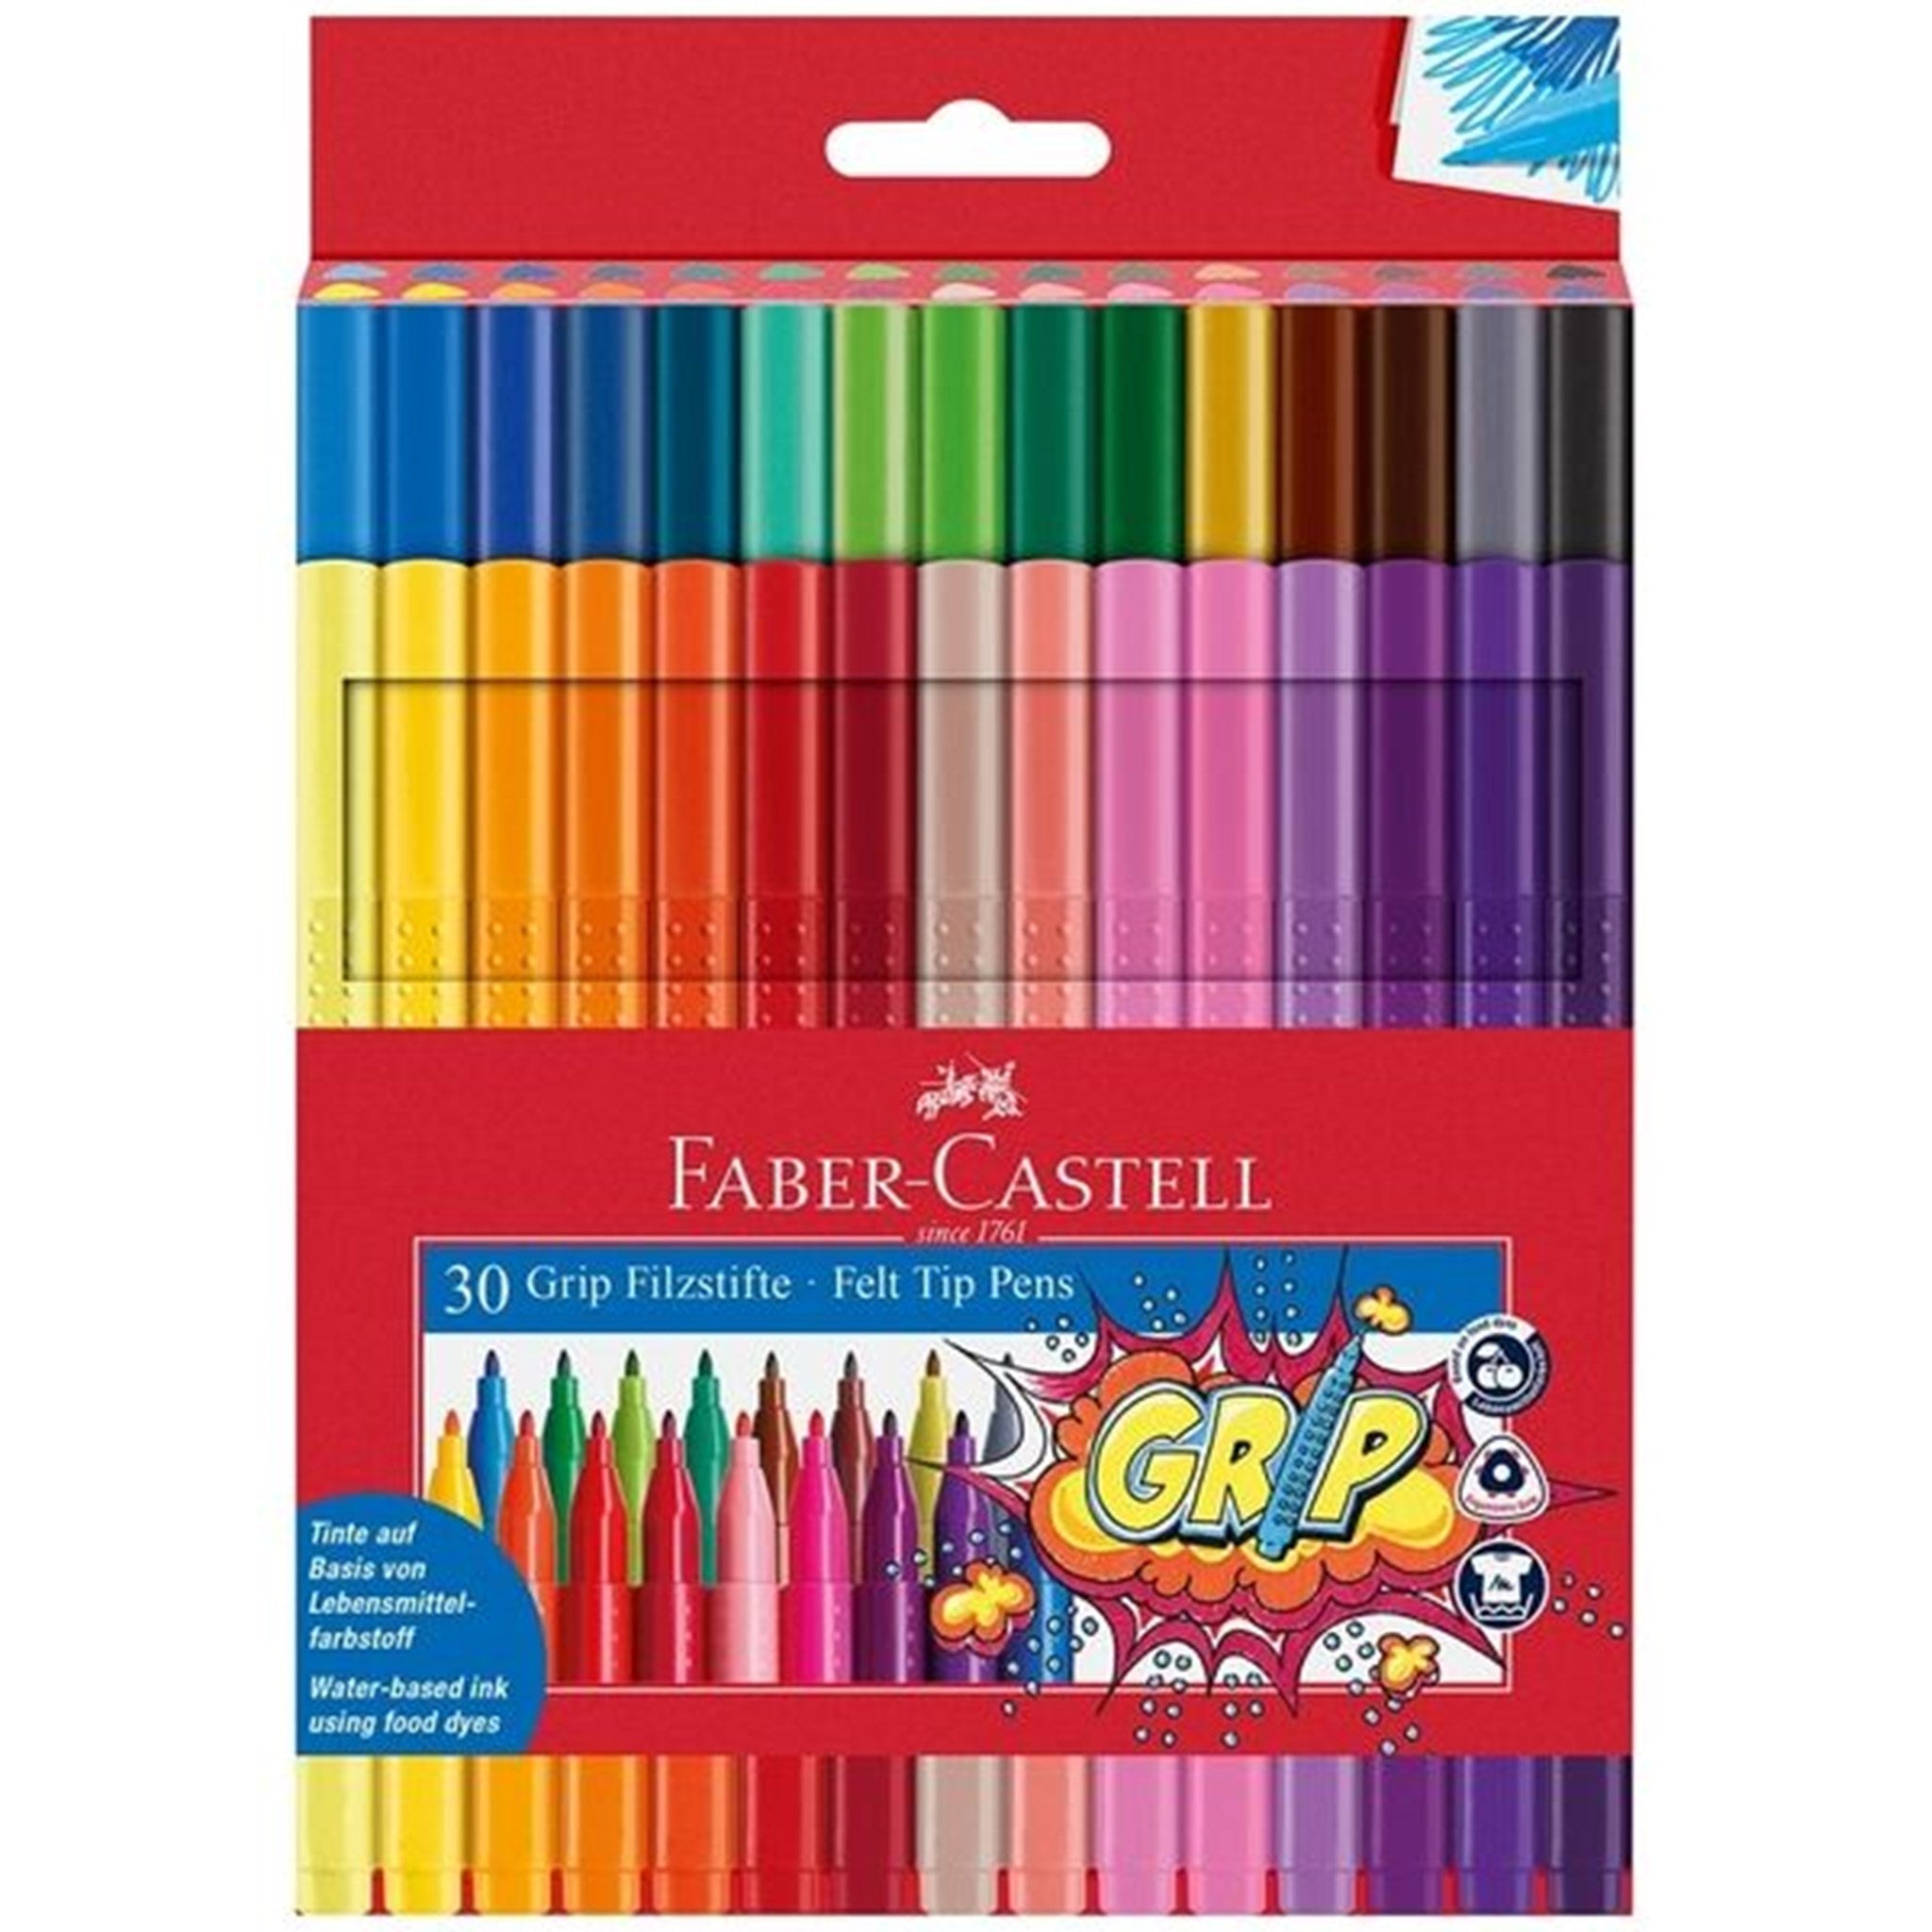 Faber Castell Grip 30 彩色马克笔是艺术家